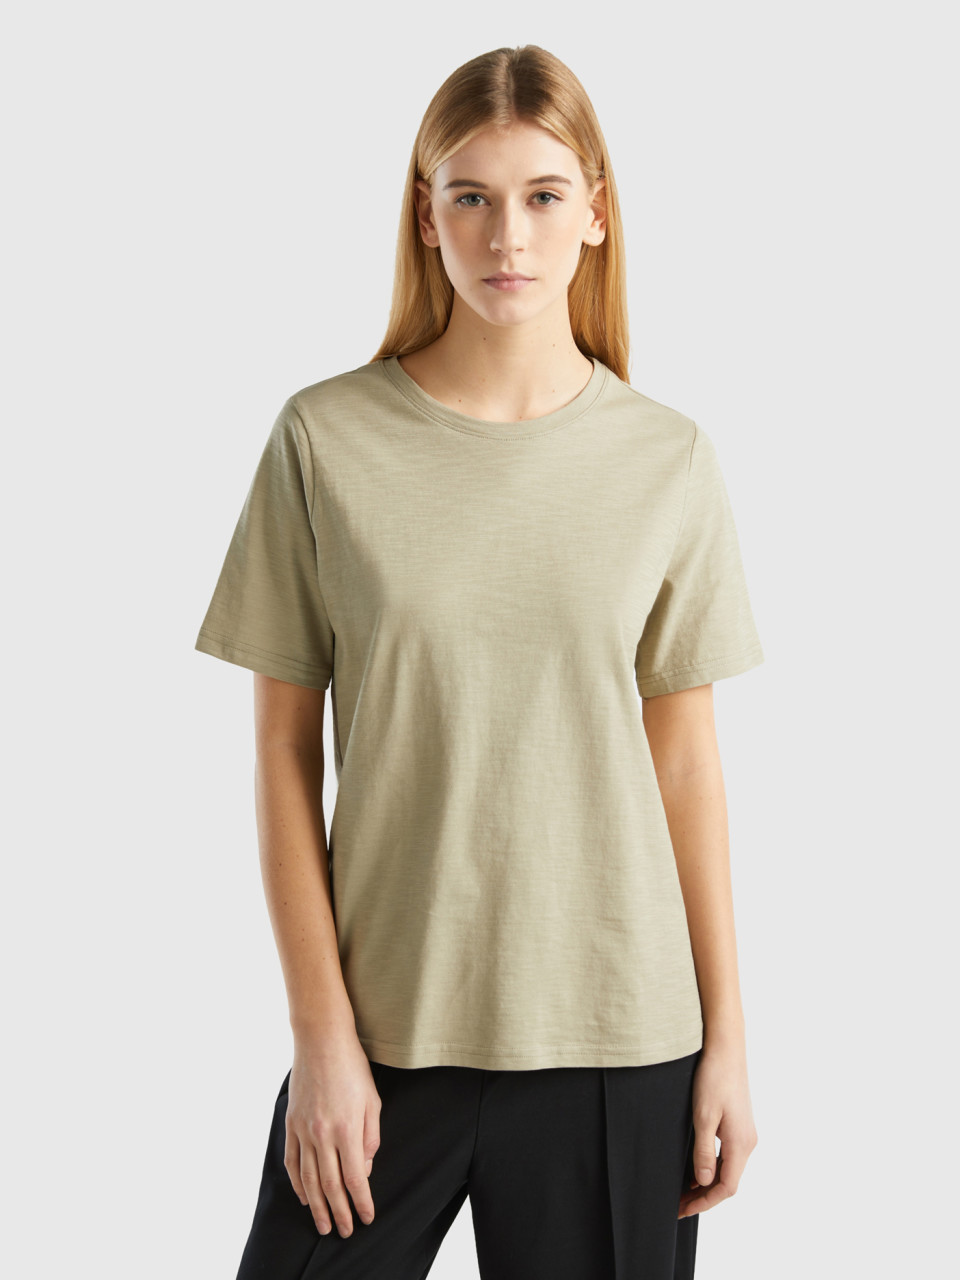 Benetton, Crew Neck T-shirt In Slub Cotton, Light Green, Women